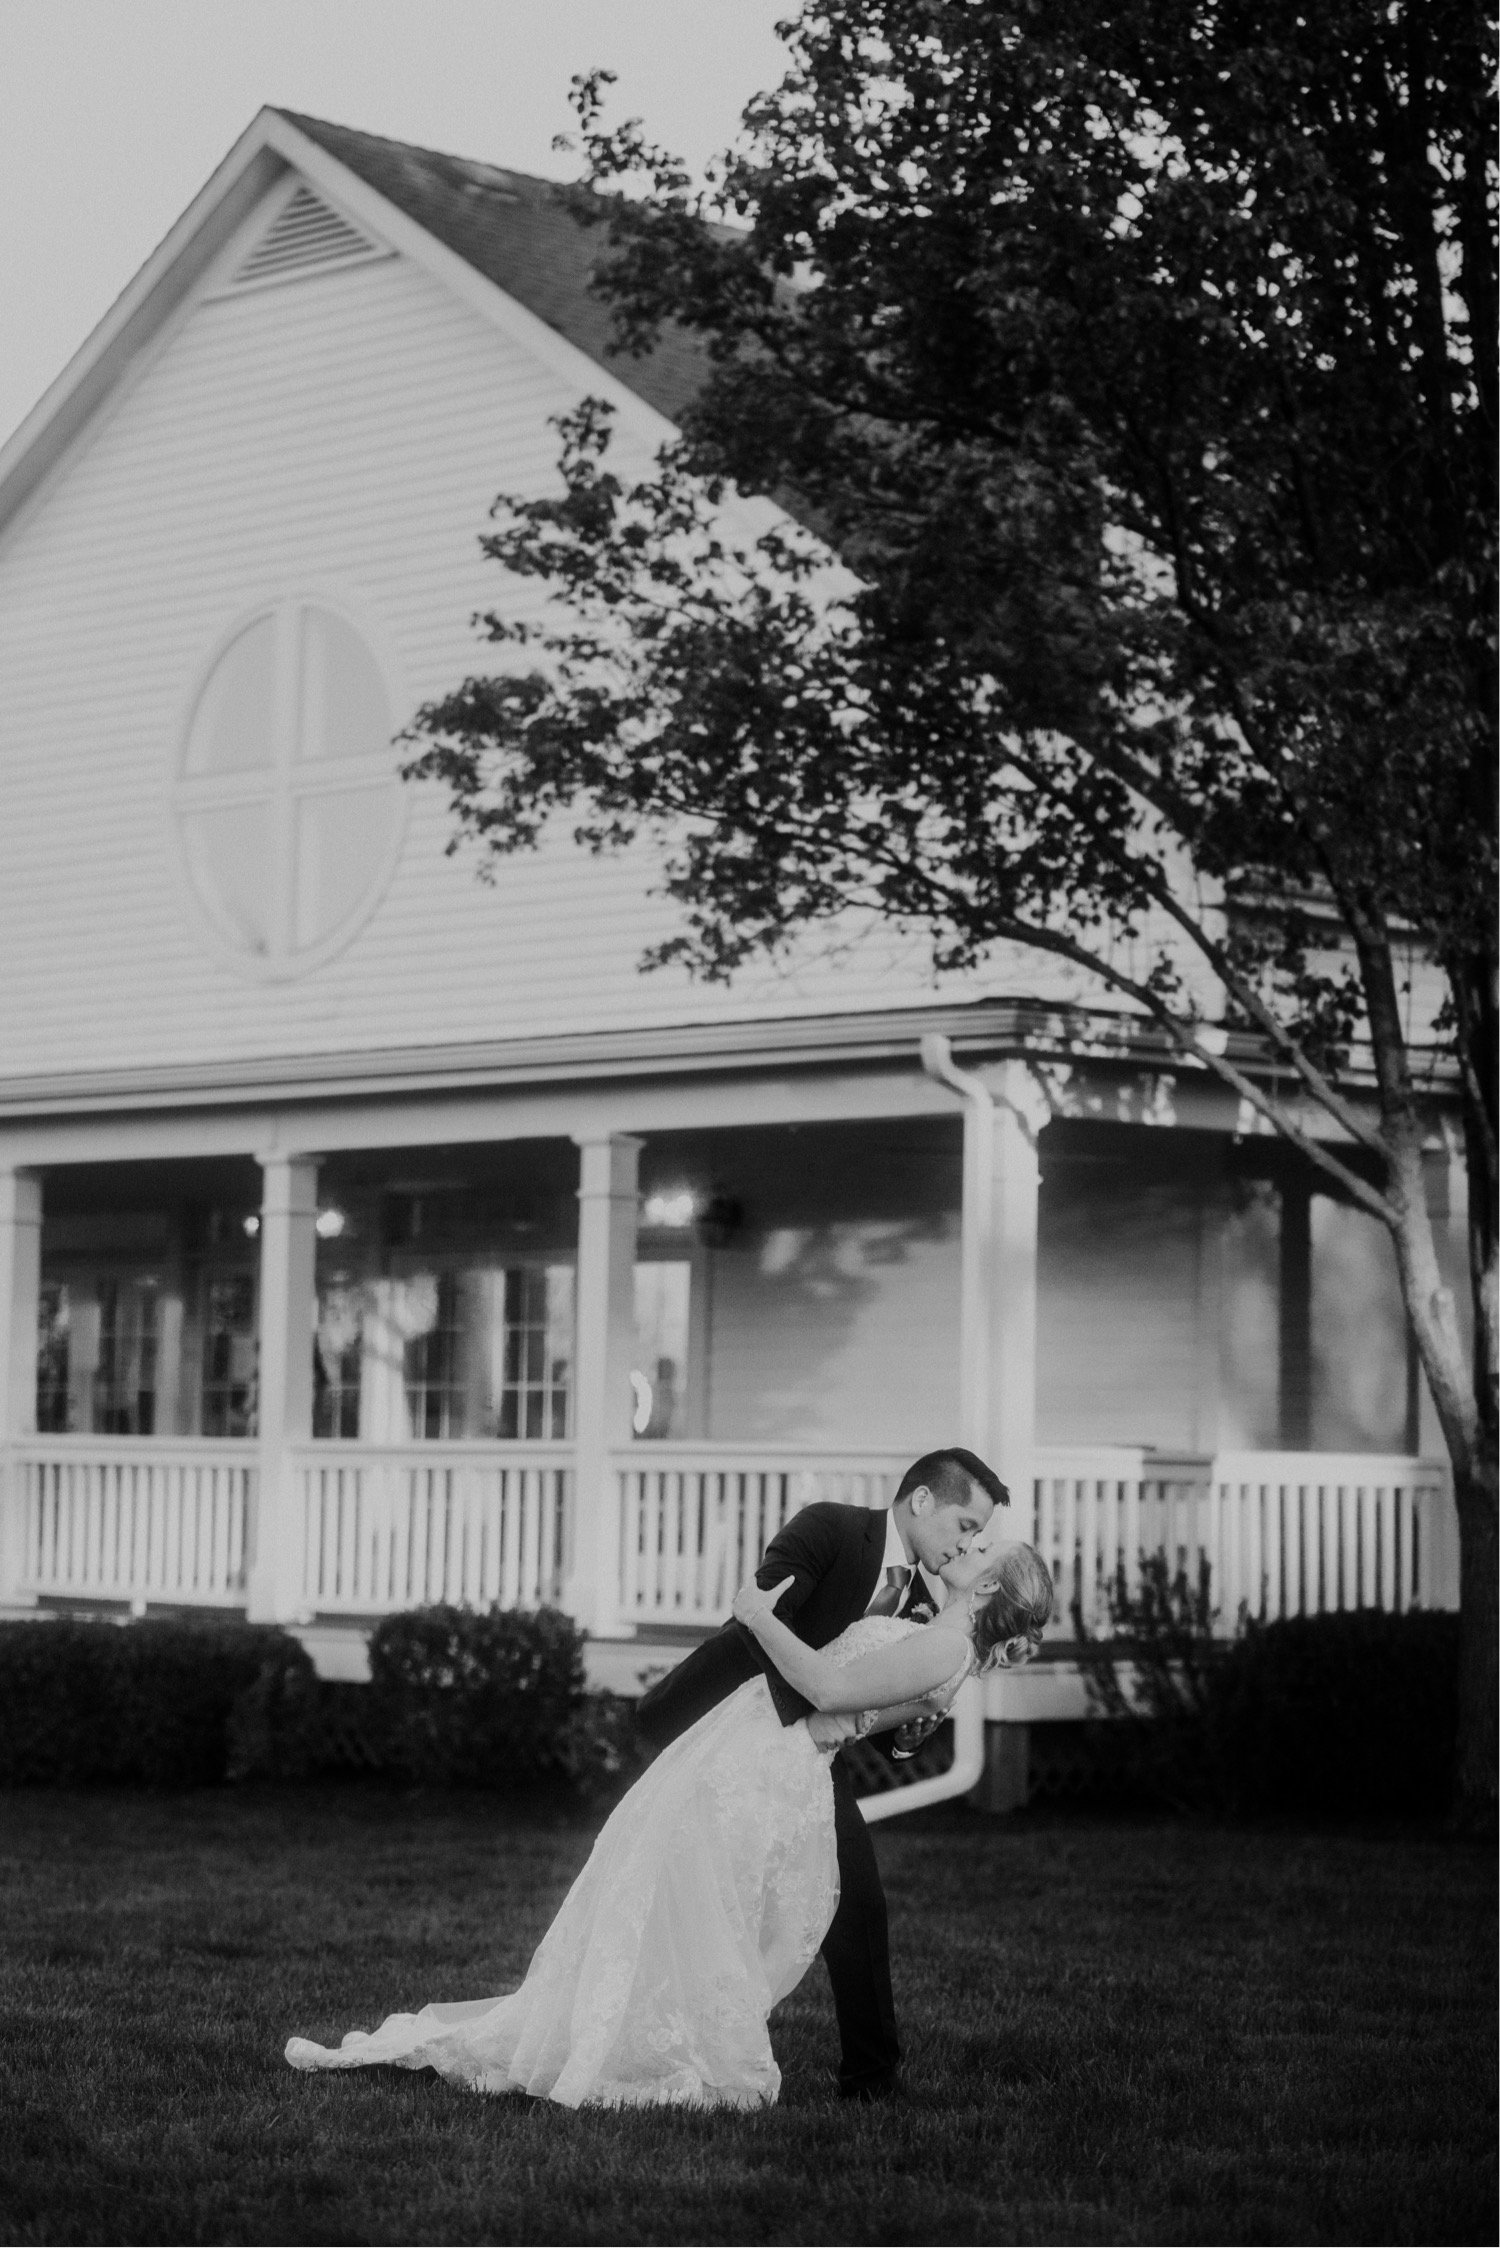 075_Alyssa&Vince-726-2_Hawthorne-house-kansas-city-wedding-photography-missouri-parkville-kelsey-diane-spring-bride-groom.jpg